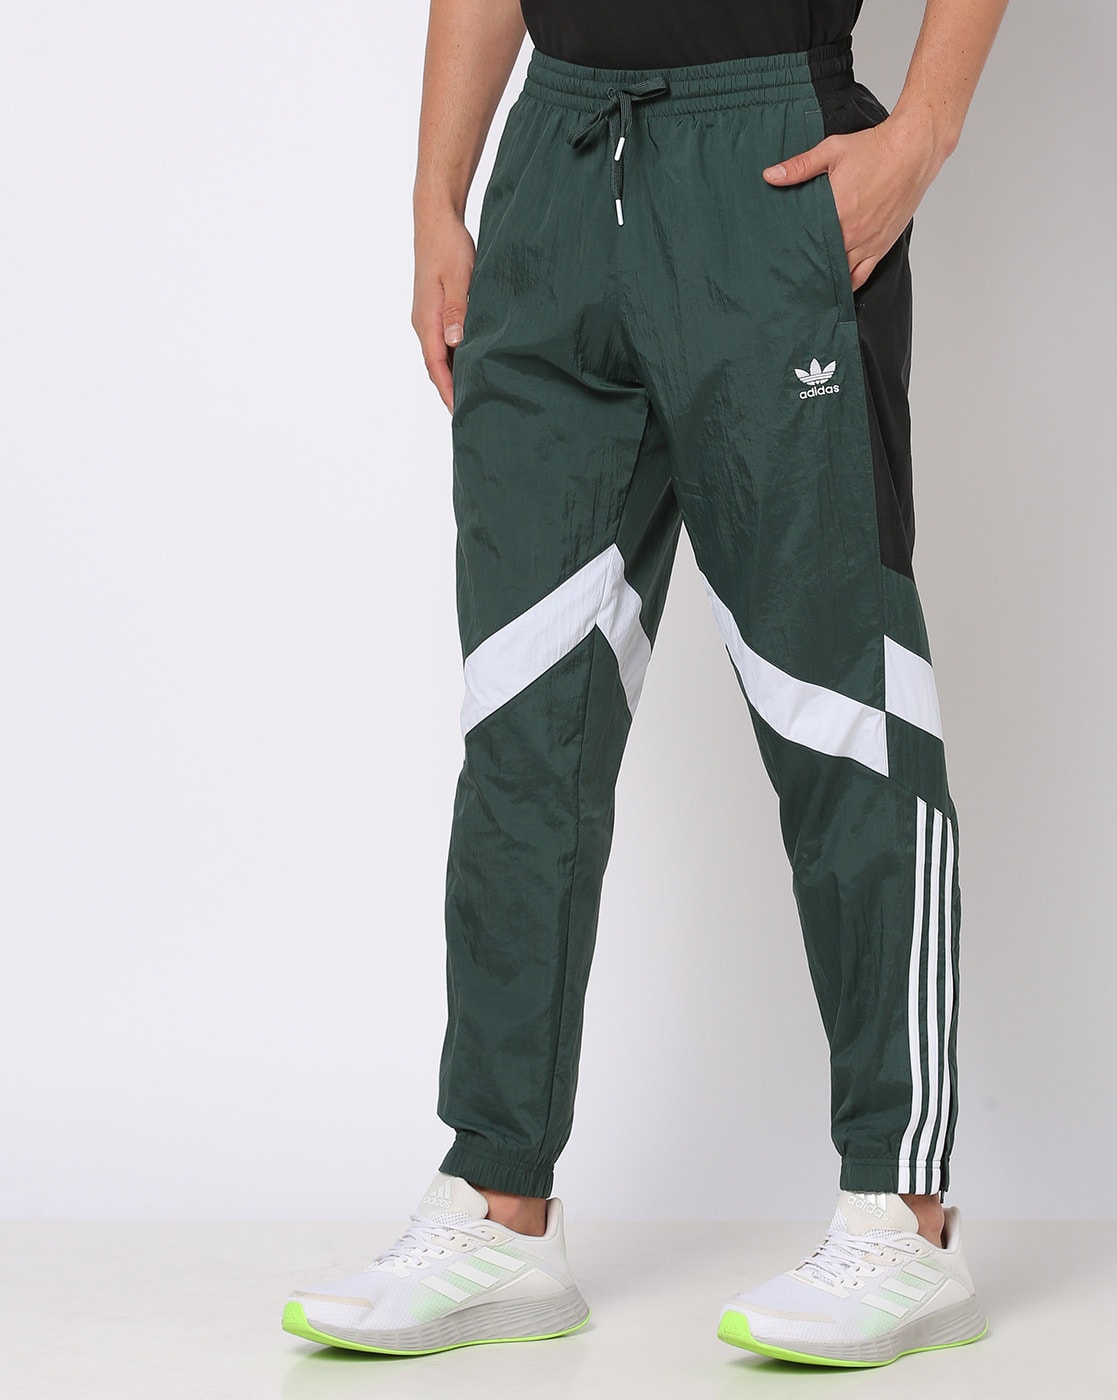 Buy Adidas Firebird Track Pants - Green At 18% Off | Editorialist